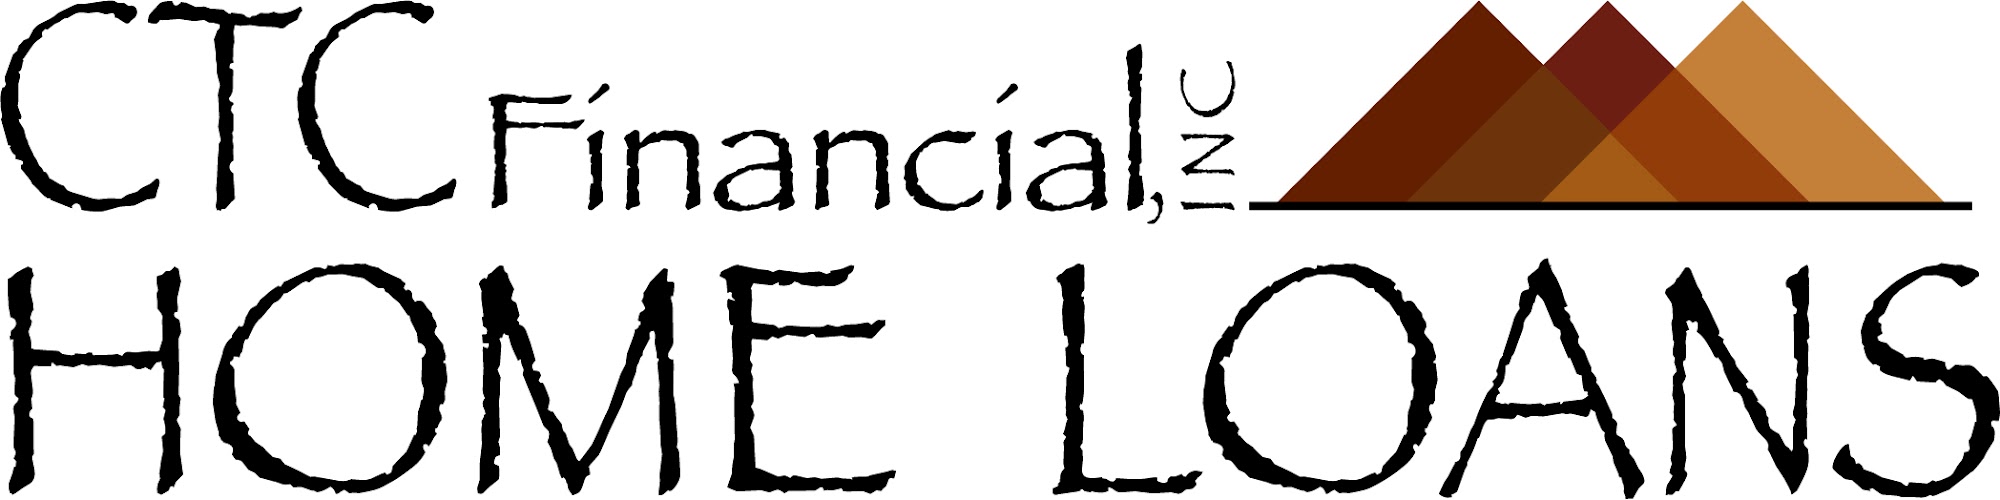 CTC Financial, Inc